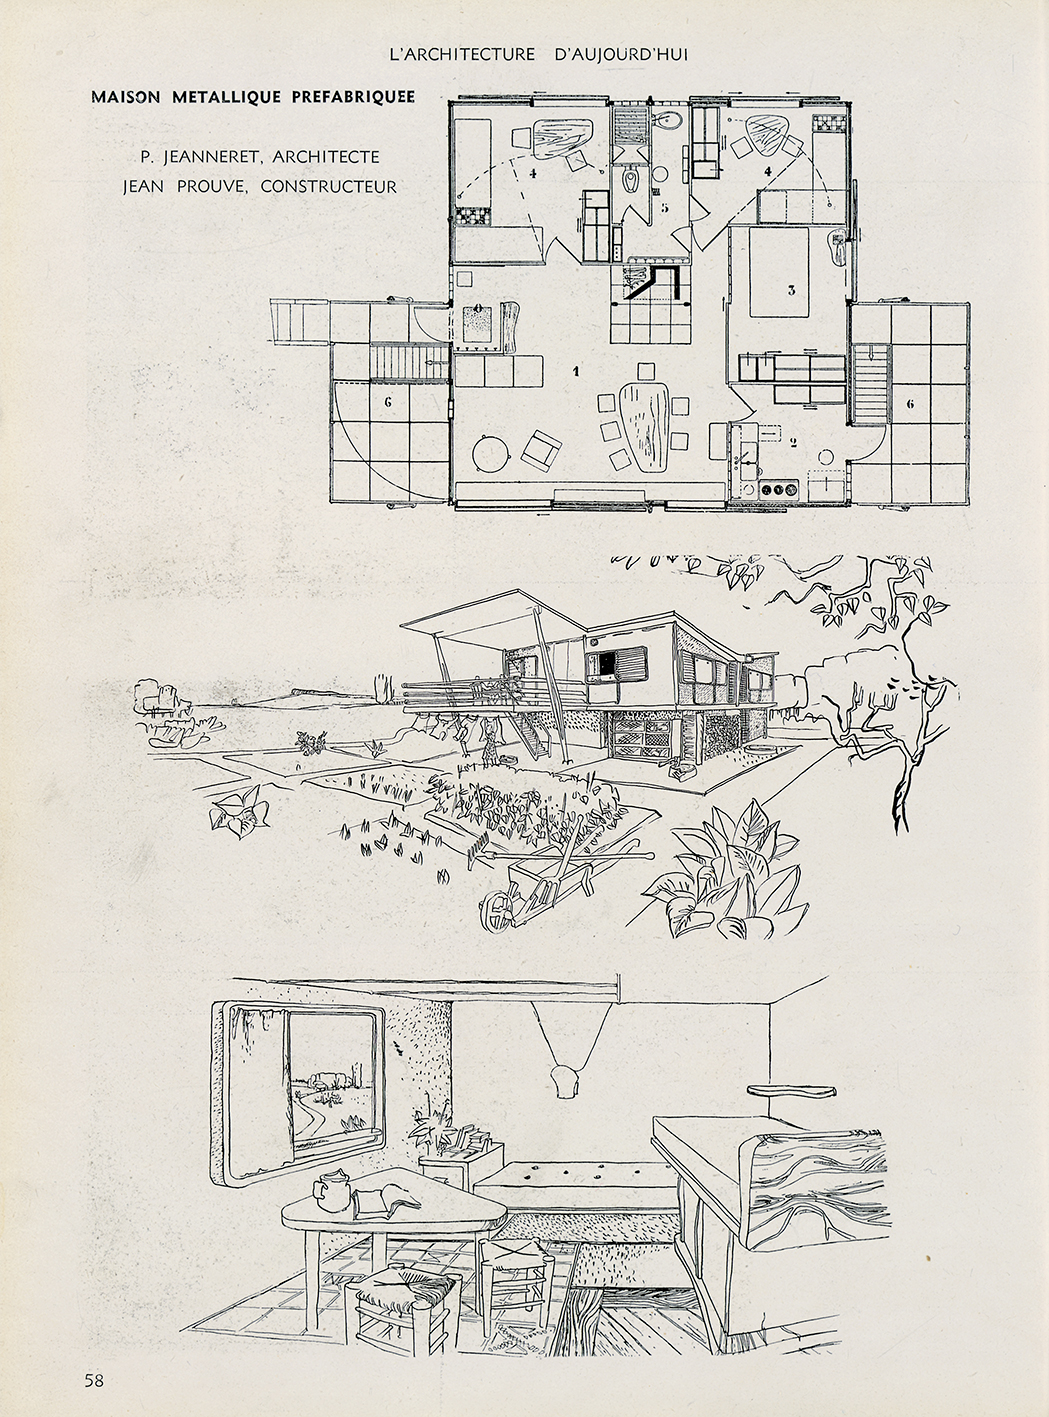 “Prefabricated wooden house – Prefabricated metal house, architect Pierre Jeanneret. Constructor Jean Prouvé”, <i>L’Architecture d’aujourd’hui</i>, no. 4, November-December 1945.